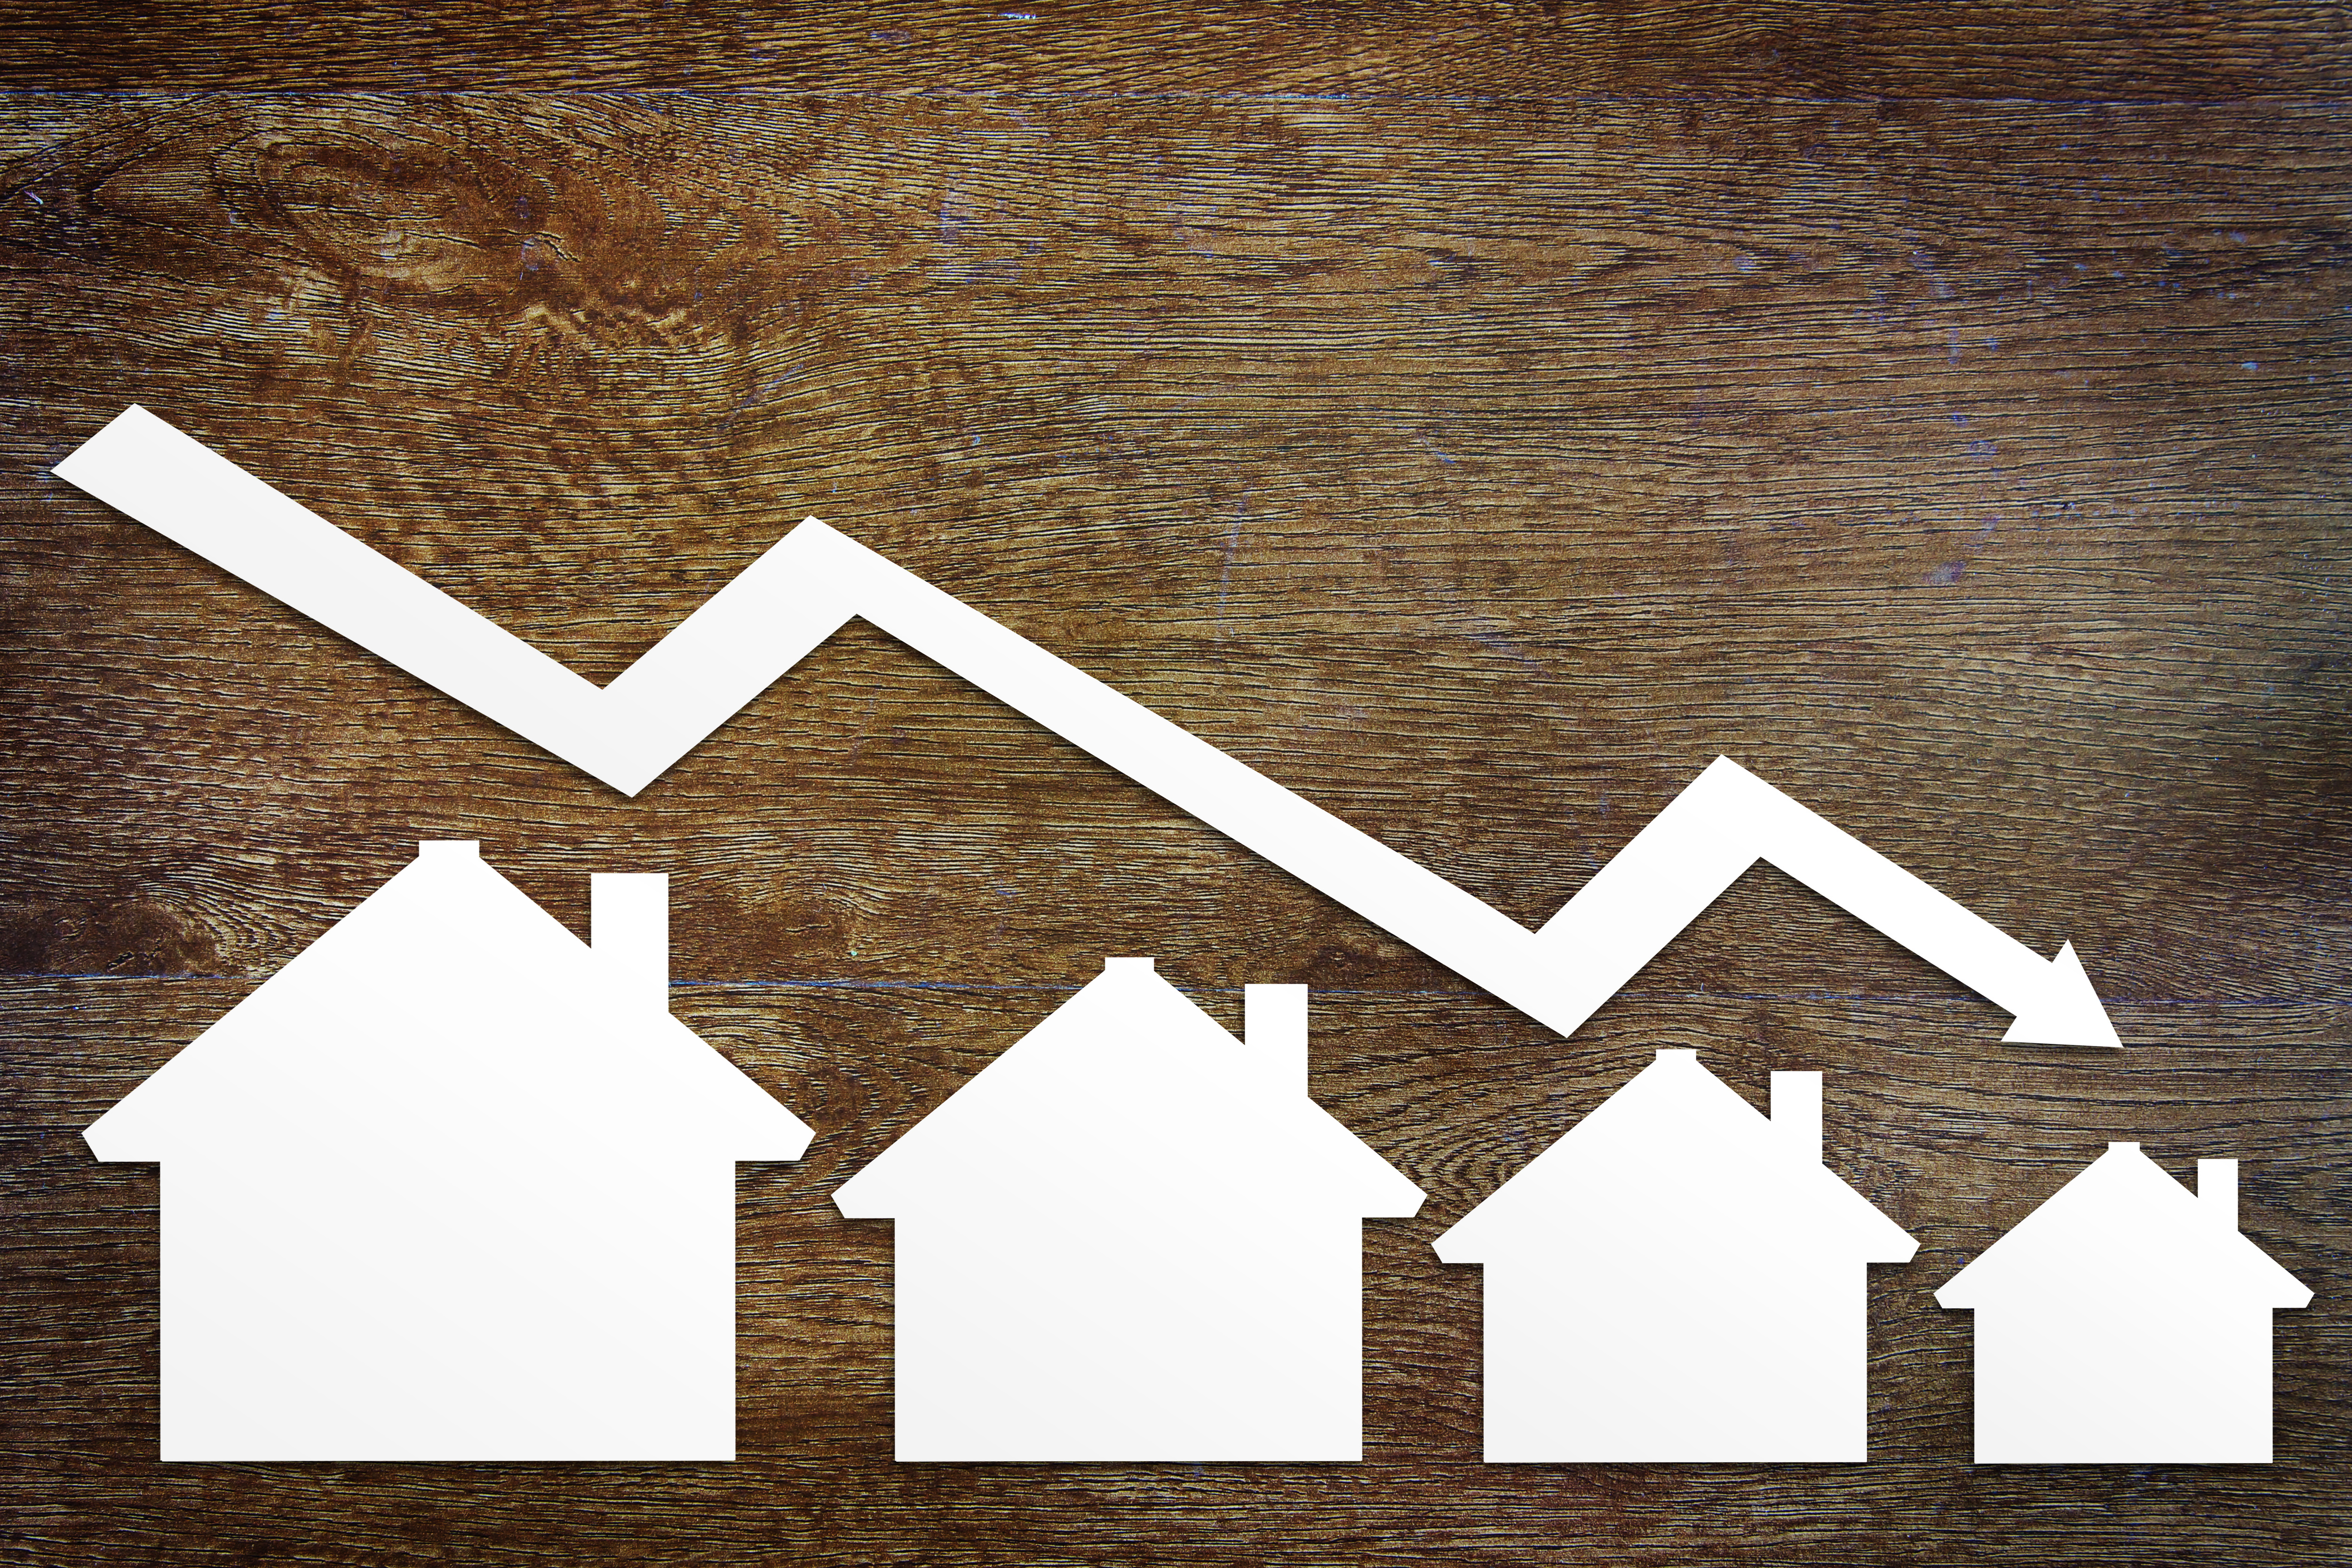 Latest HomeLet data shows rental growth gradually falling